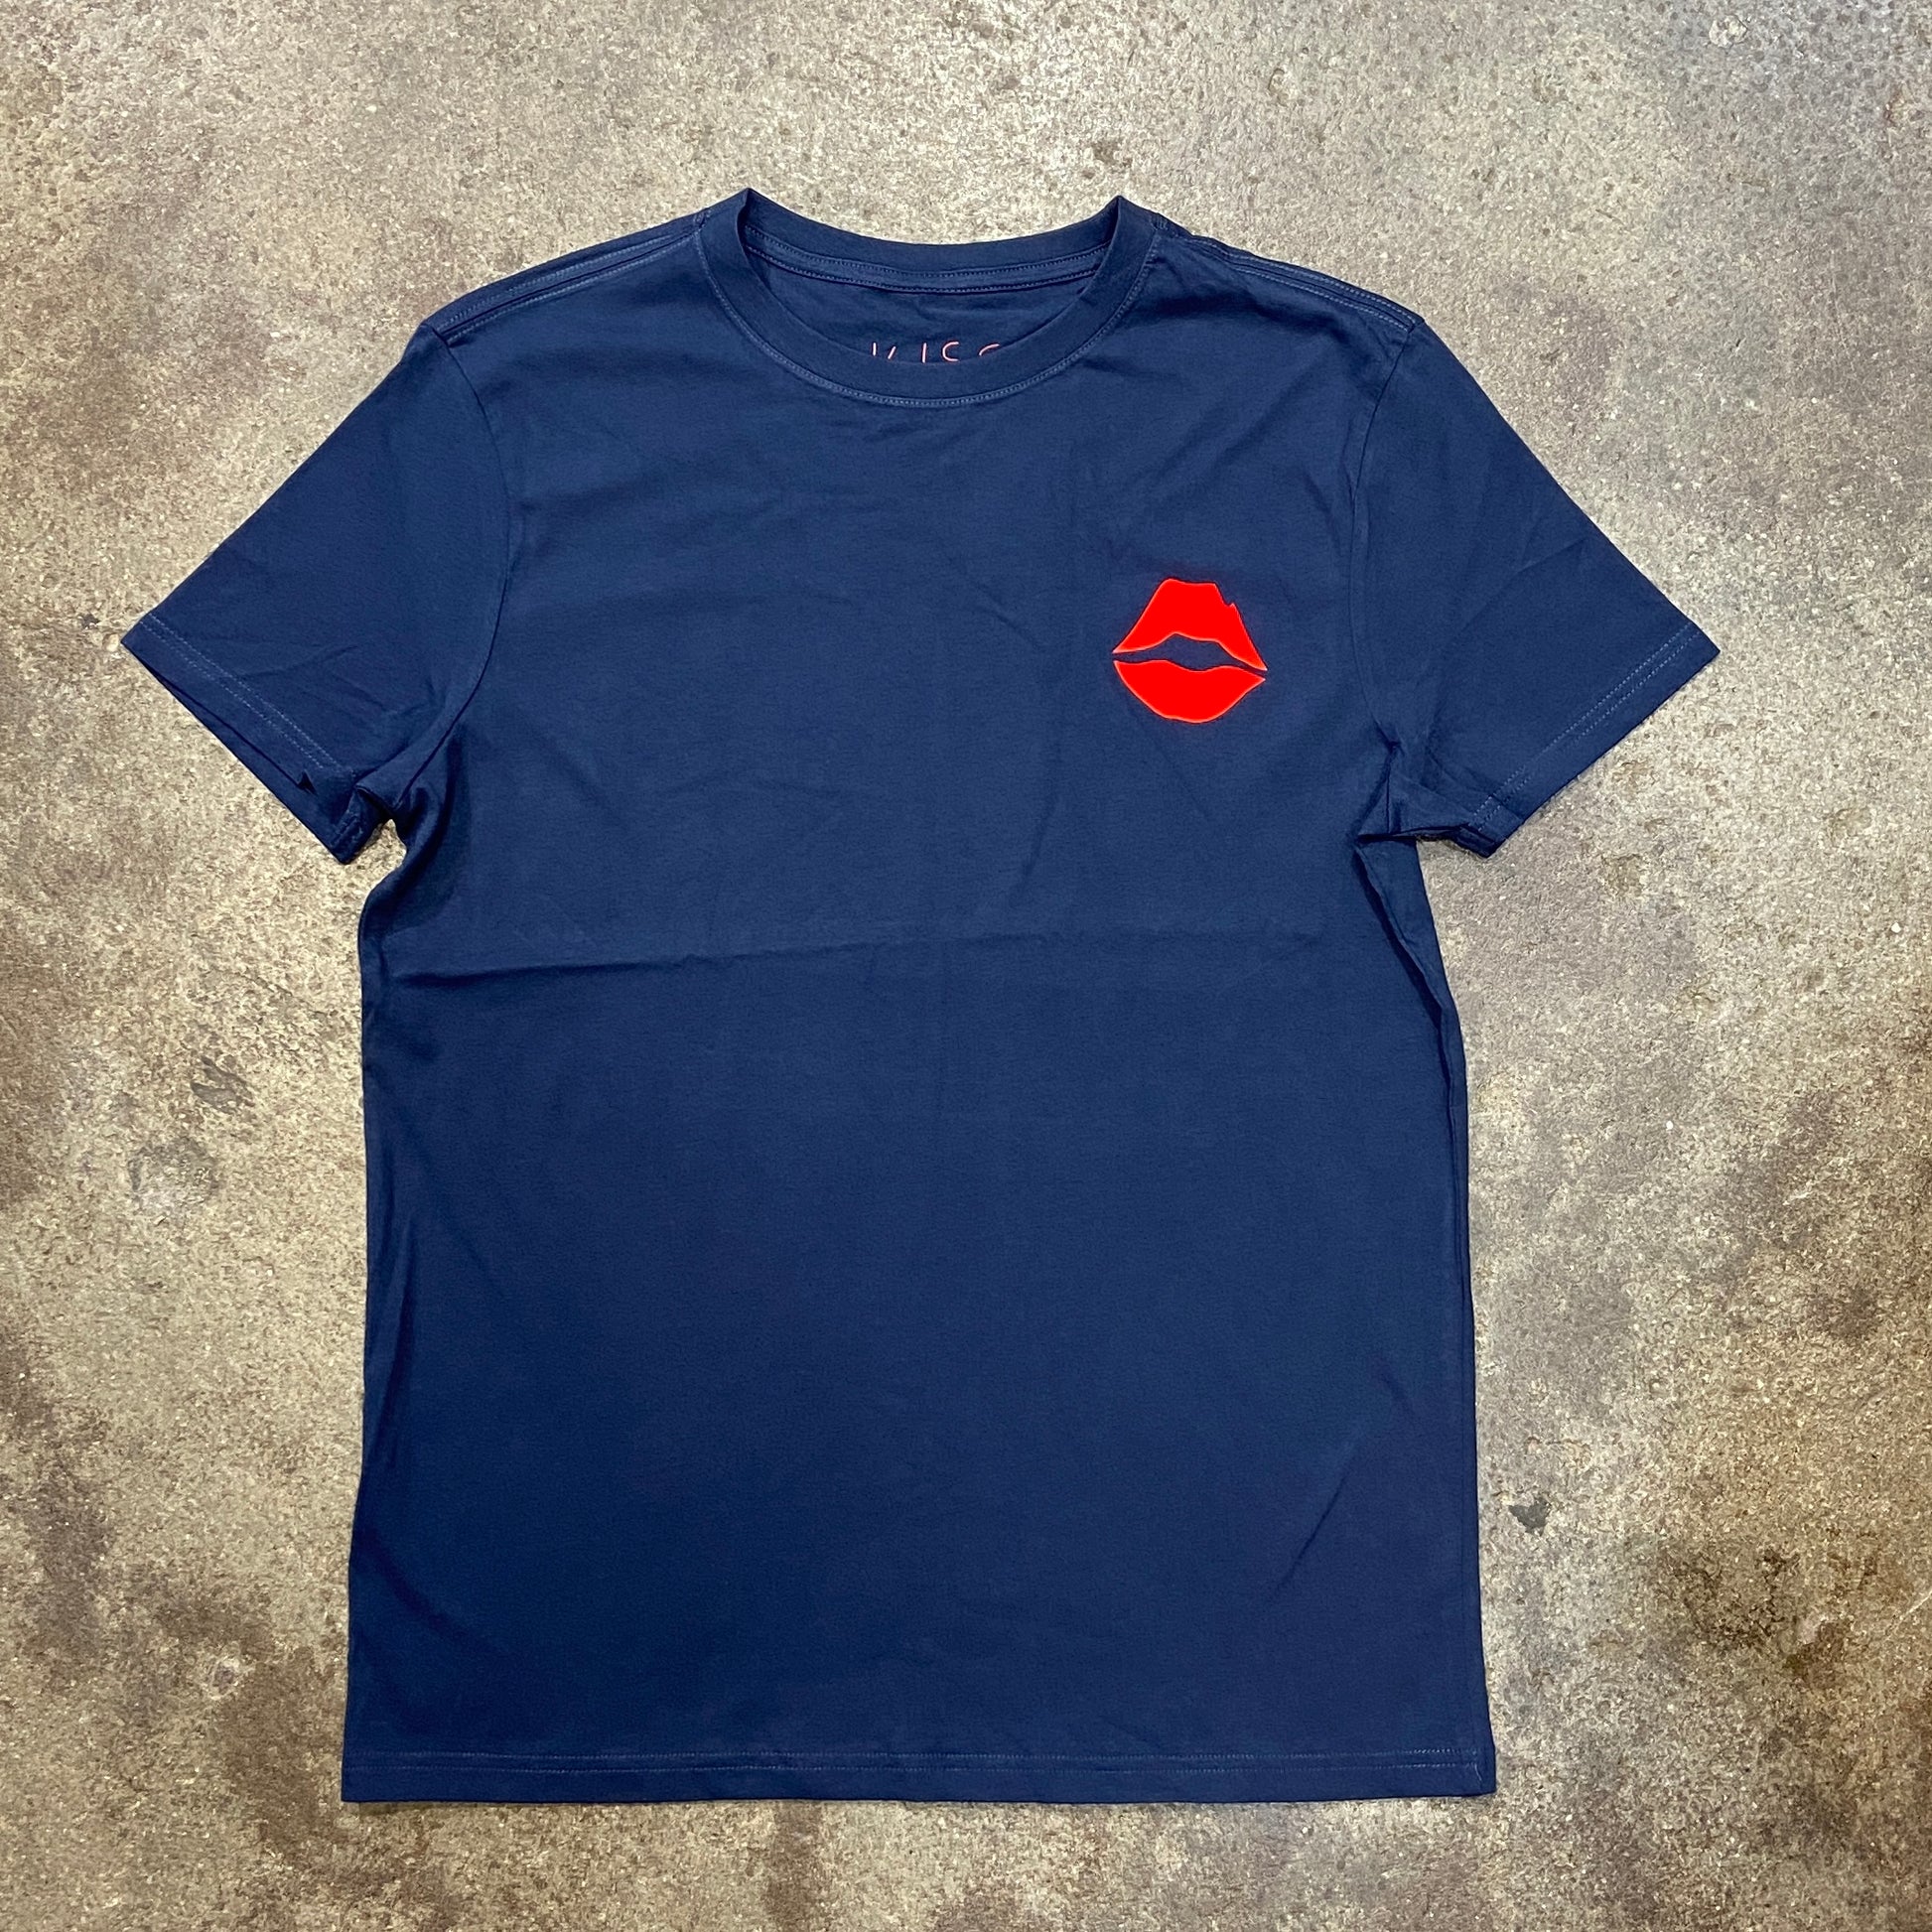 KISS T-Shirt Cape nTown